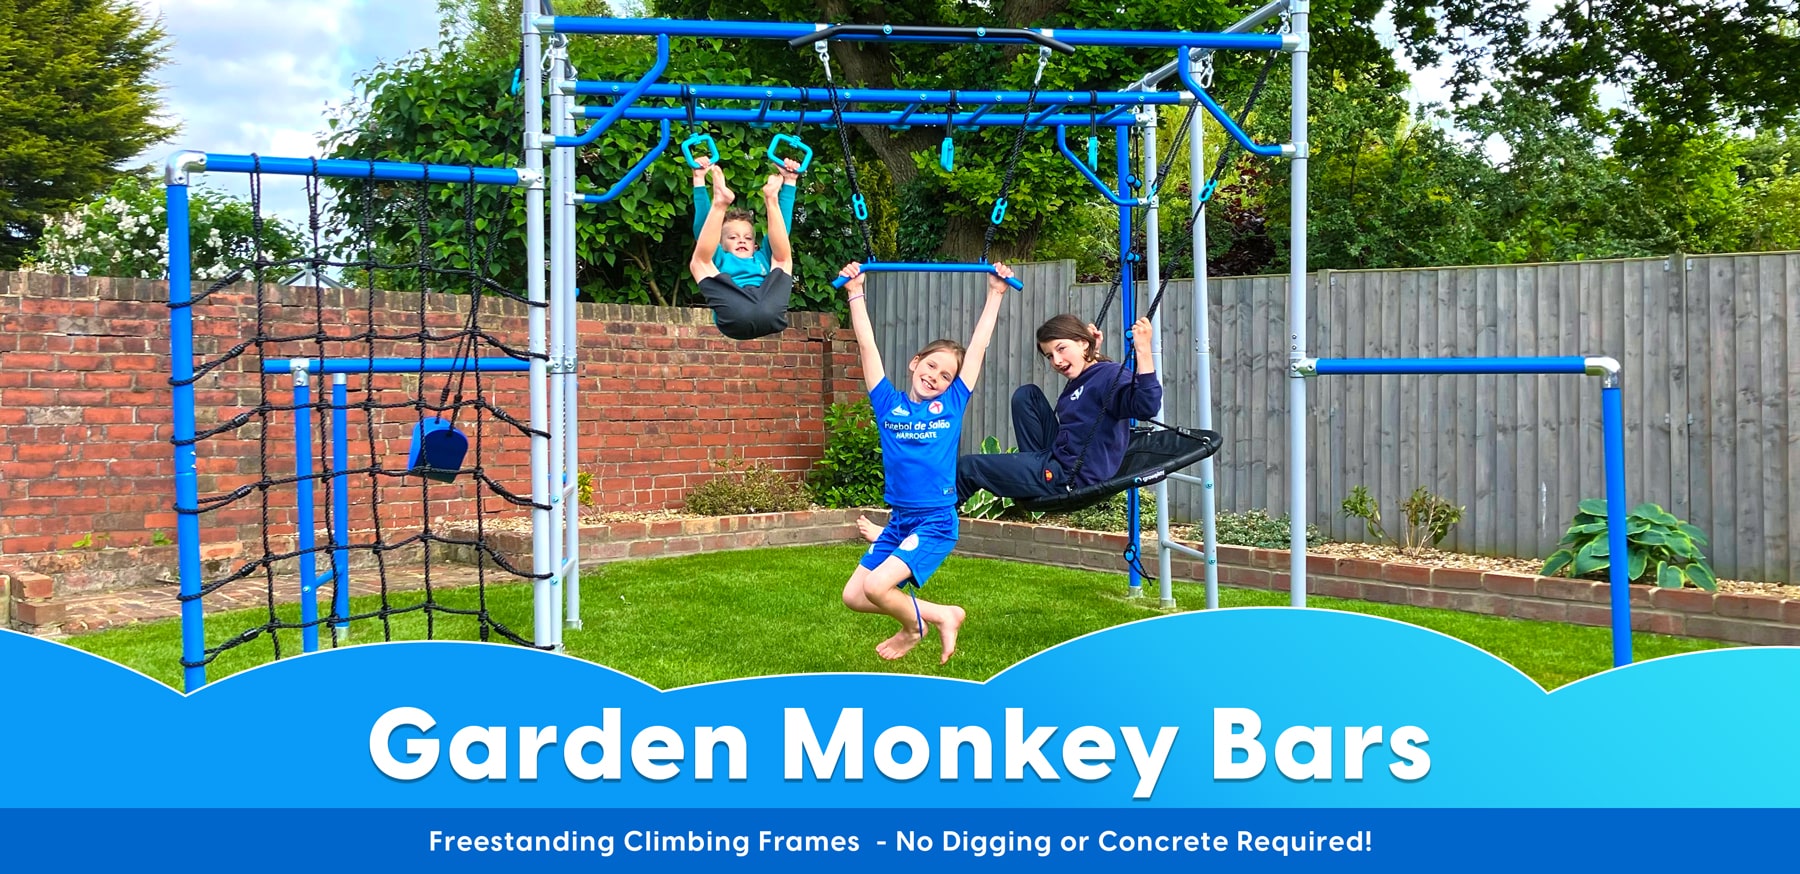 Classic Backyard Metal Monkey Bars Climber